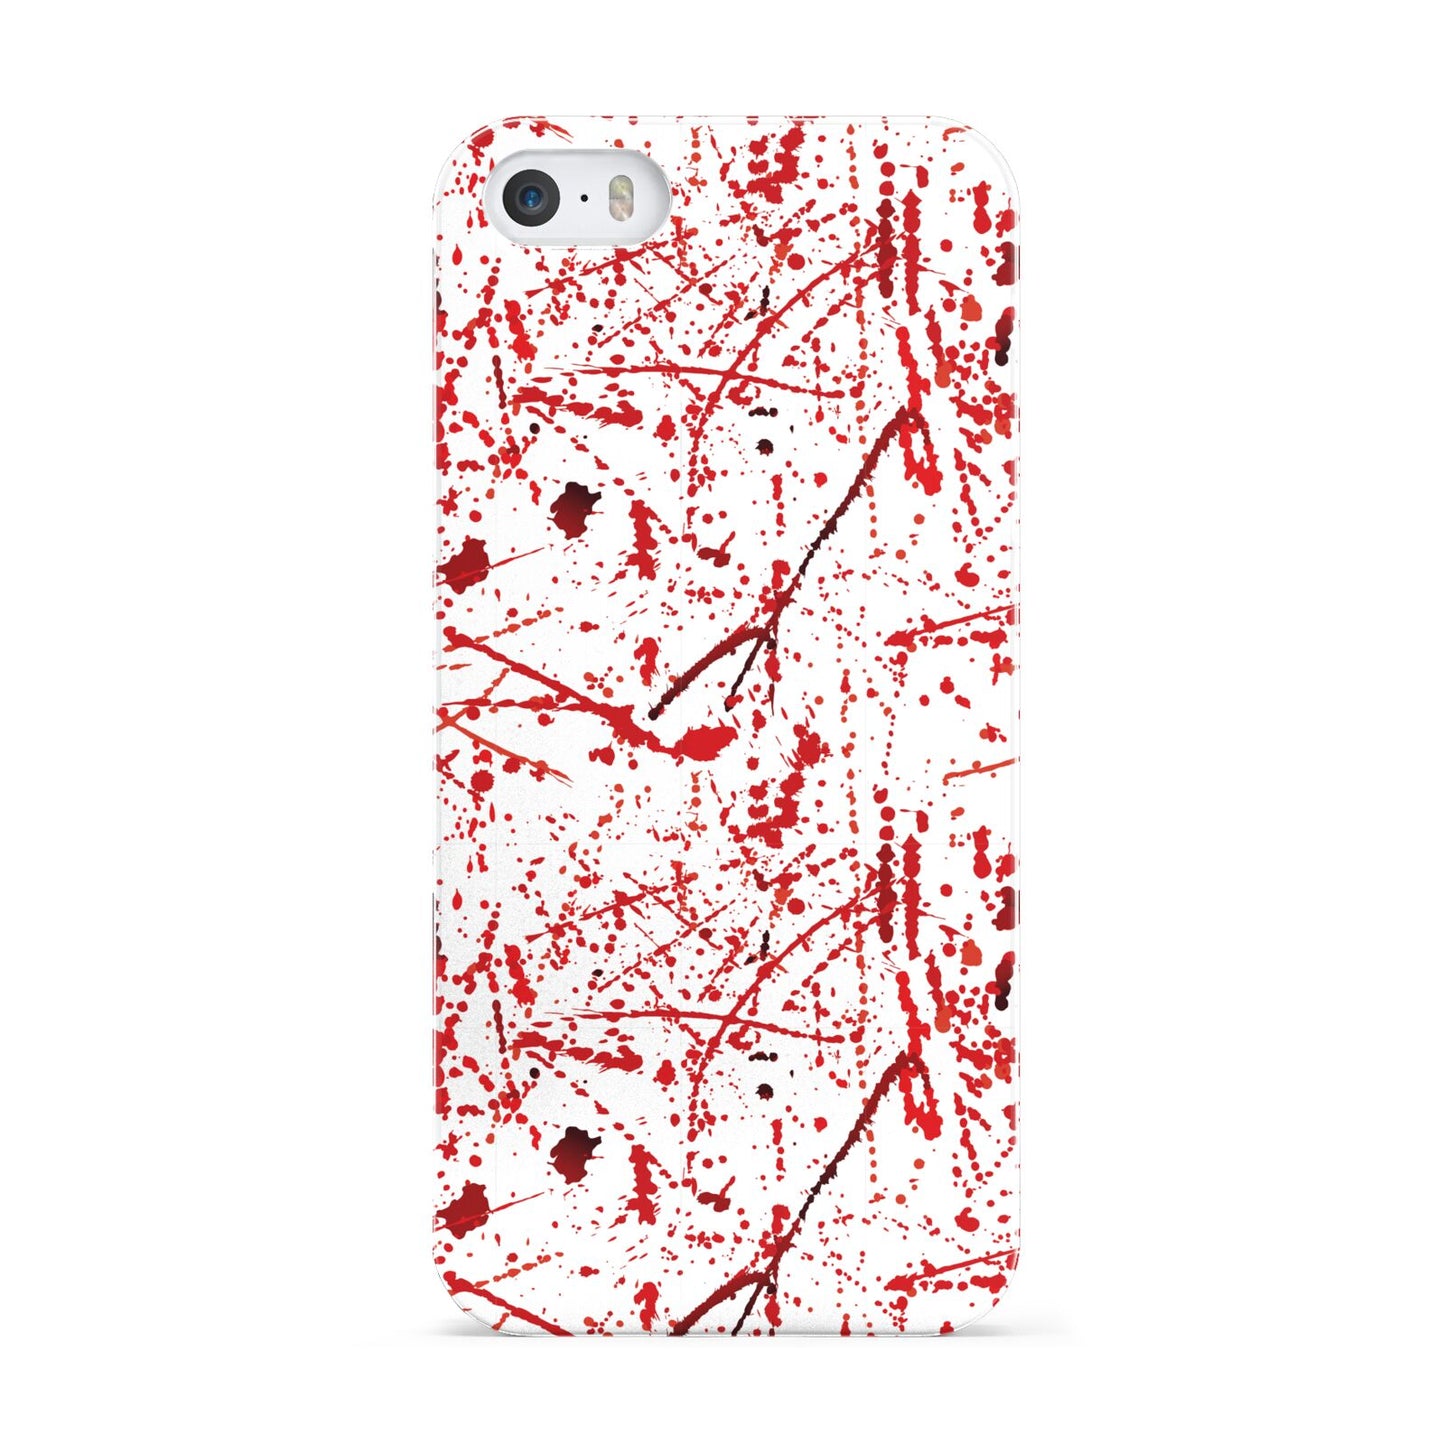 Blood Splatter Apple iPhone 5 Case